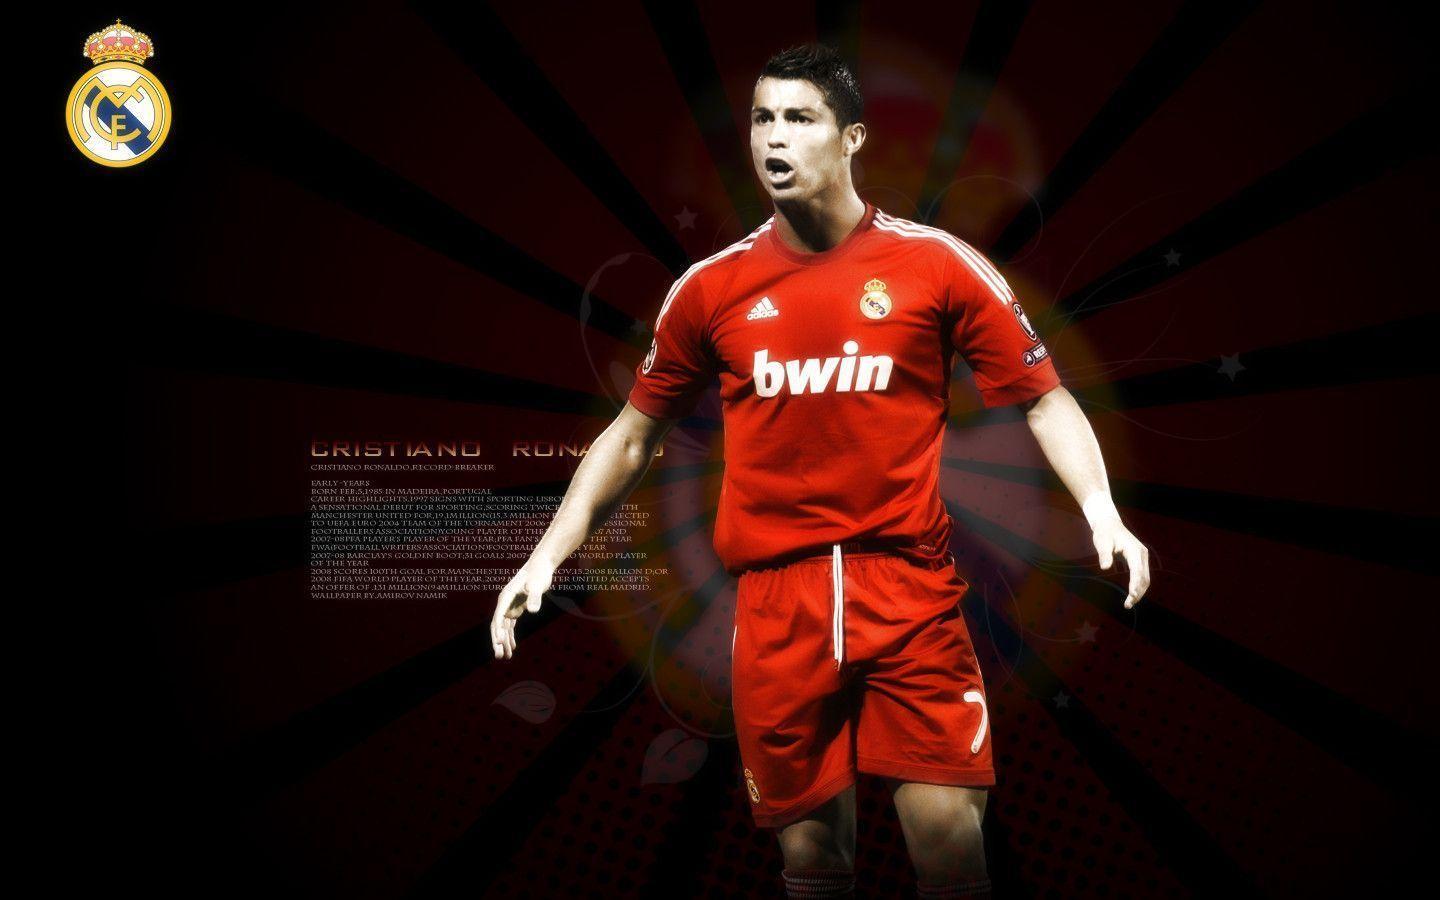 Download Cristiano Ronaldo 3 Wallpaper. Full HD Wallpaper